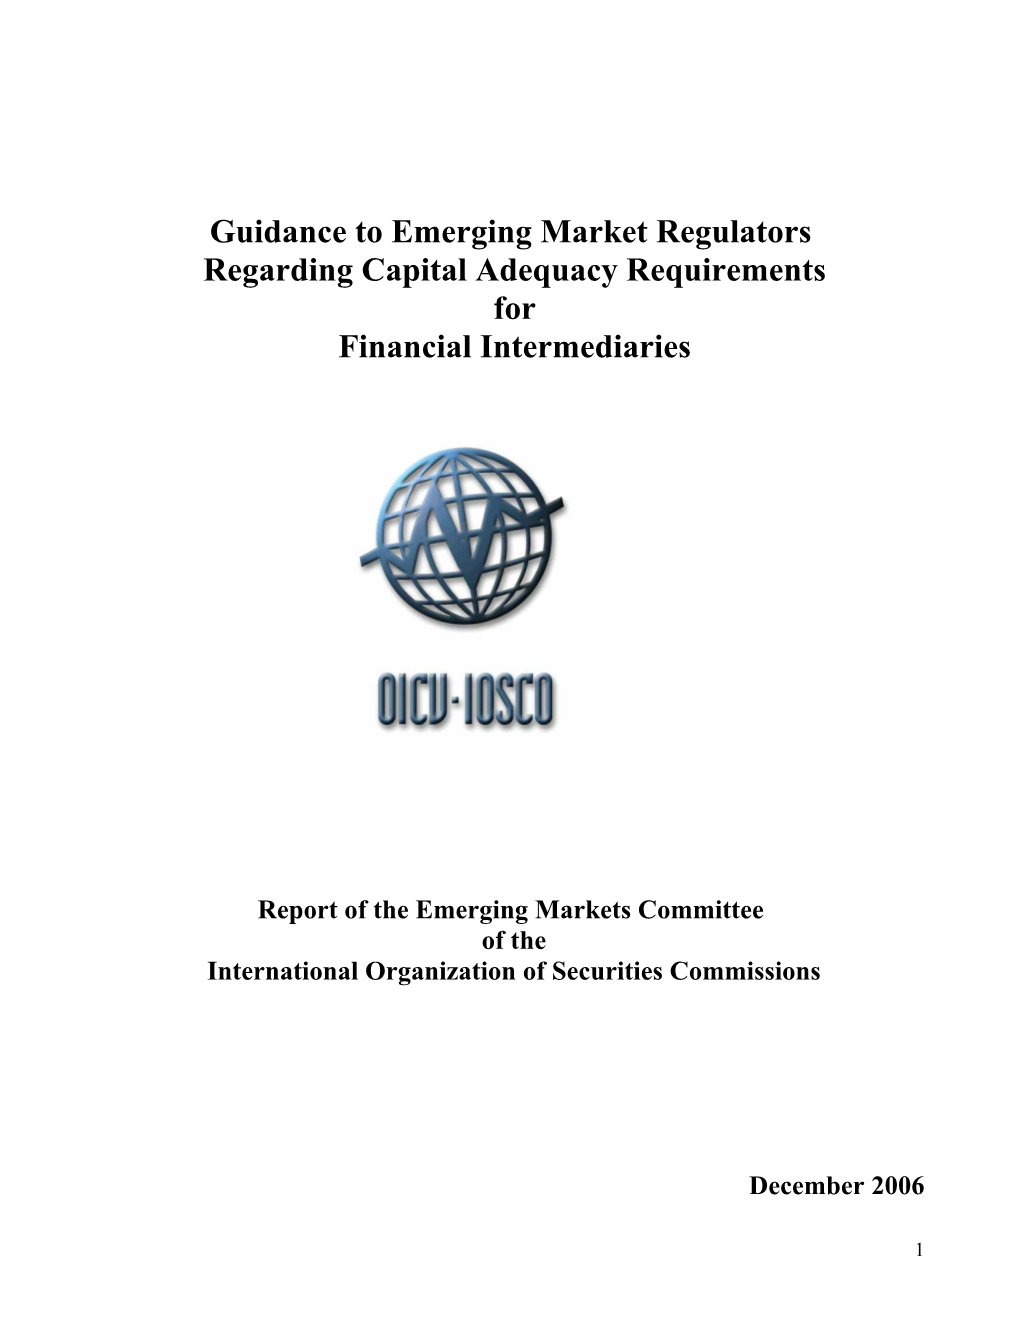 Guidance to Emerging Market Regulators Regarding Capital Adequacy Requirements for Financial Intermediaries